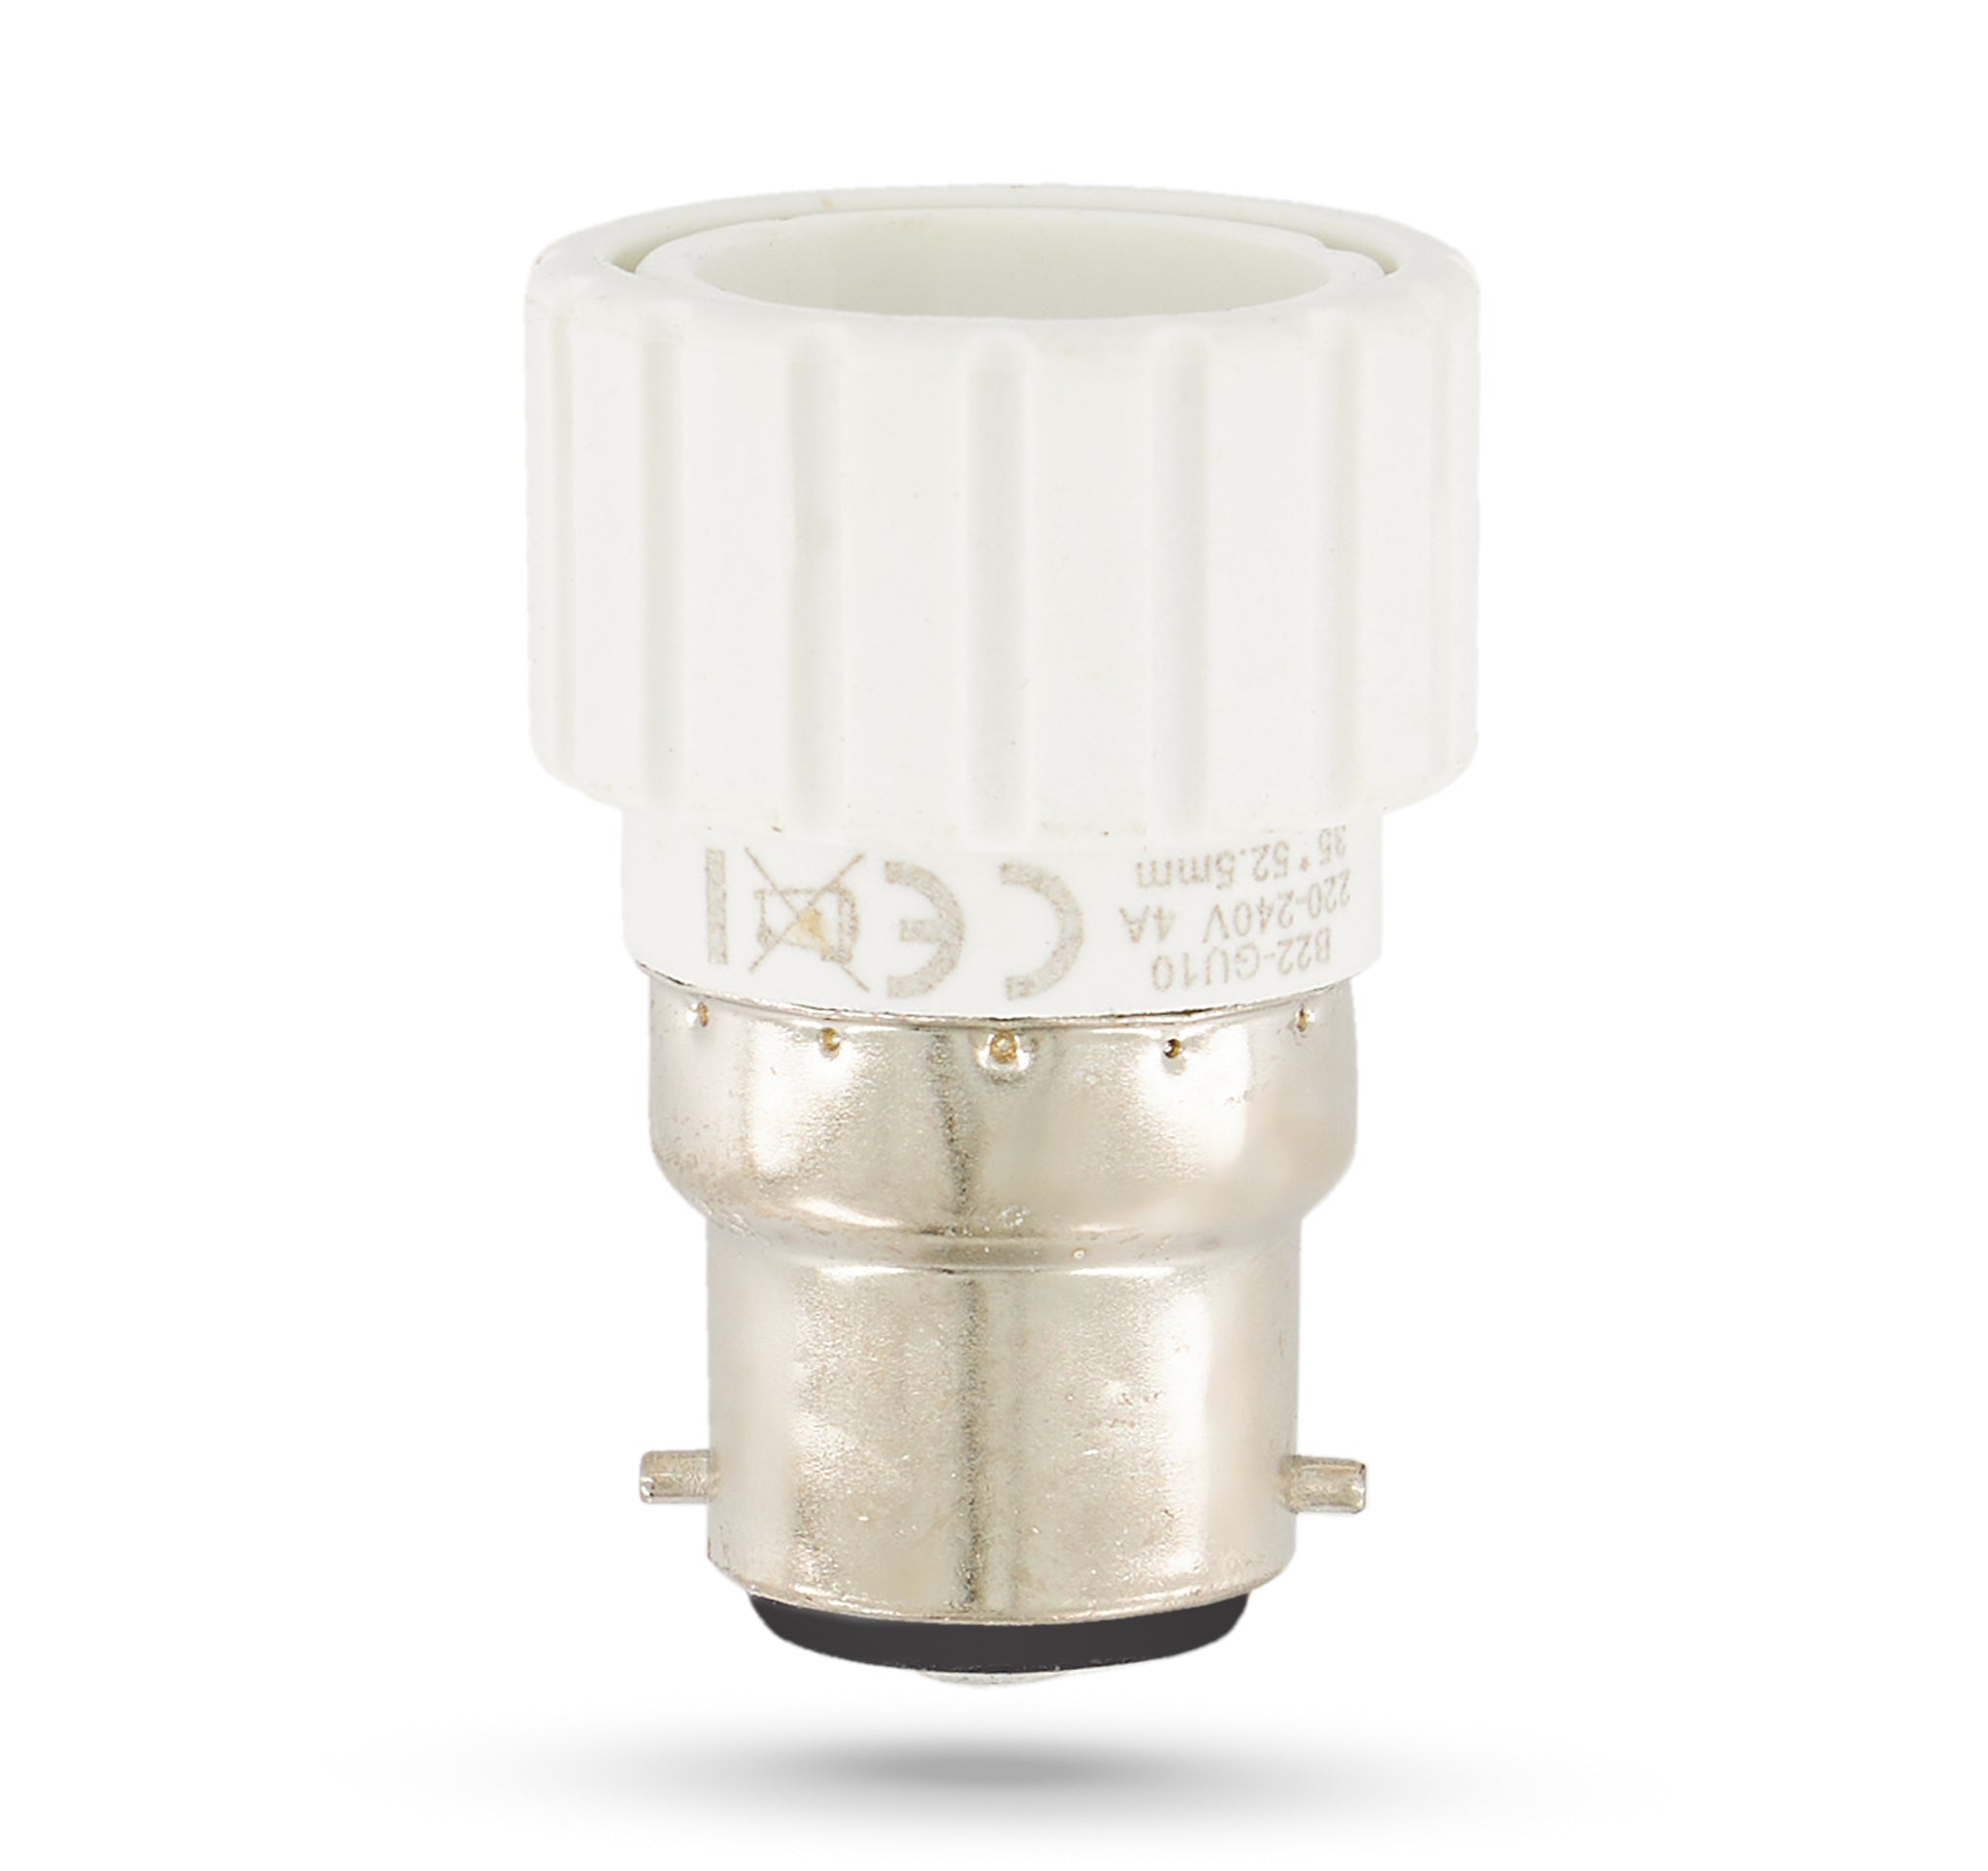 PIFCO Brass Bulb Mount Converter B22 to GU10